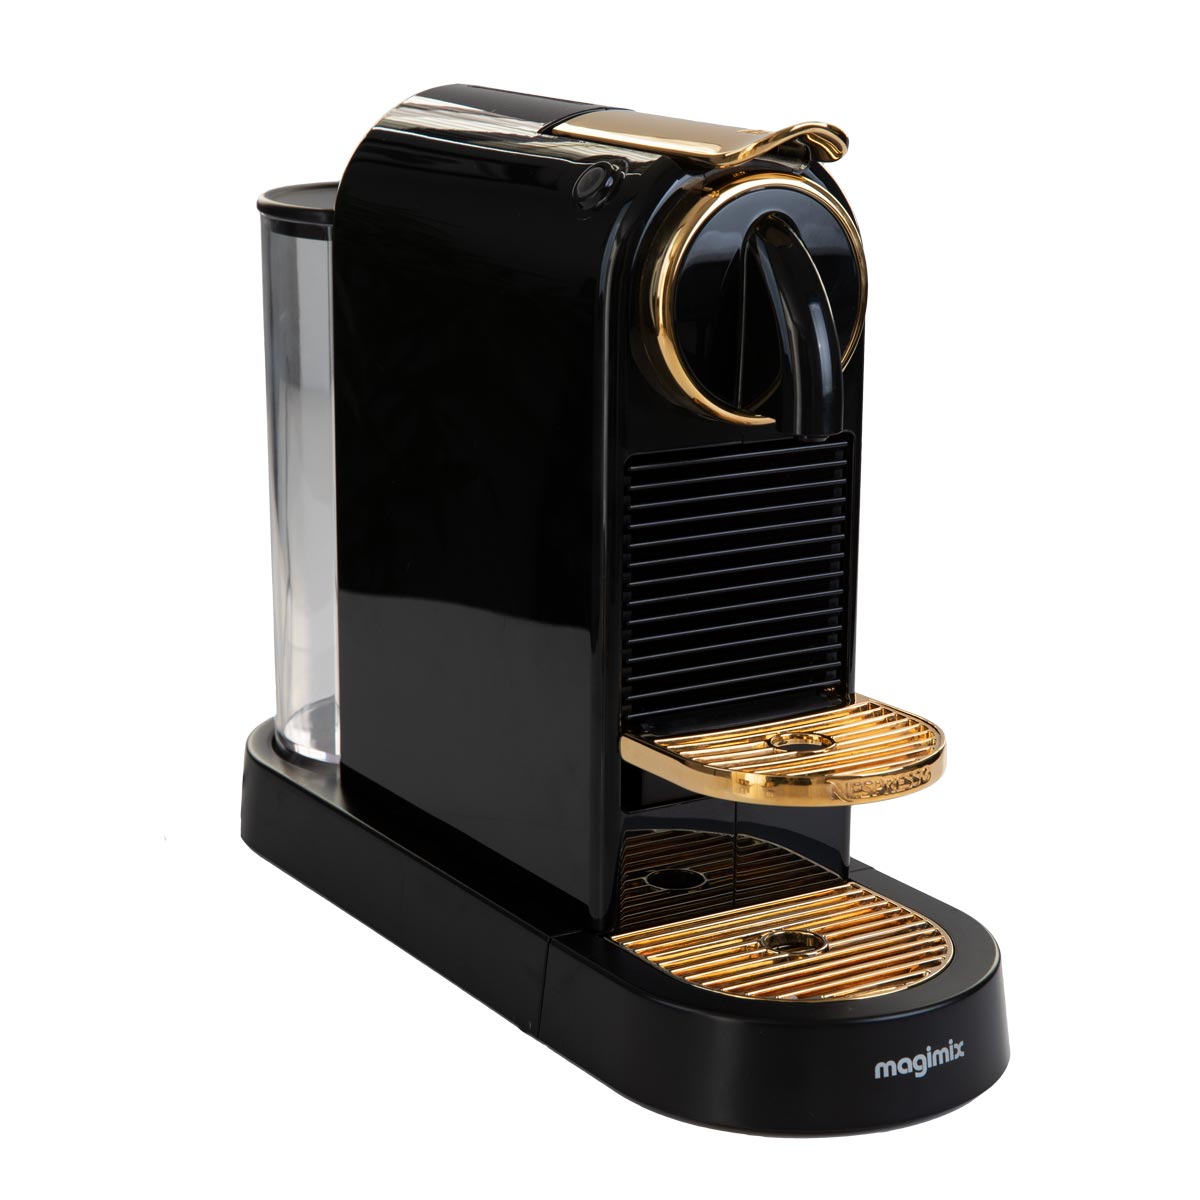 Bestrating Kilauea Mountain Aandringen Luxury Nespresso Coffee Machine - Elite Luxury Gold Plating